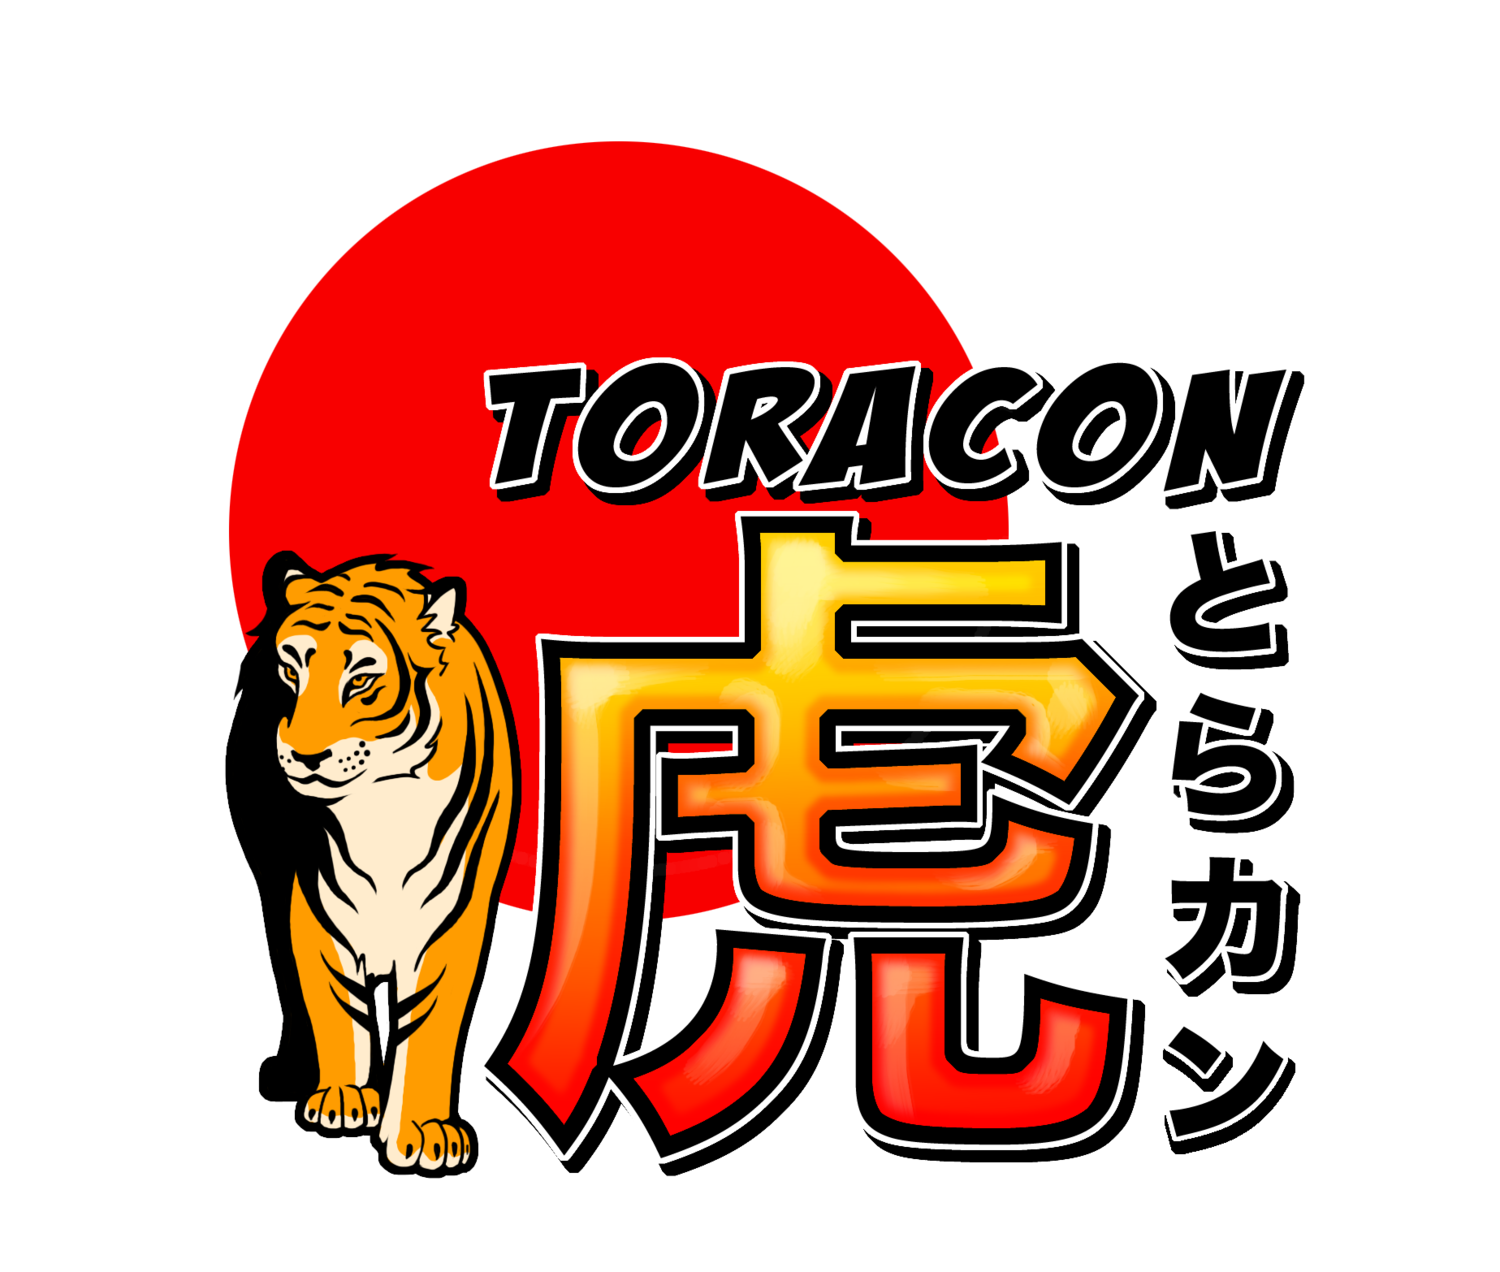 SSA+S Toracon: Anime, Gaming, Comic & Sci-Fi Convention